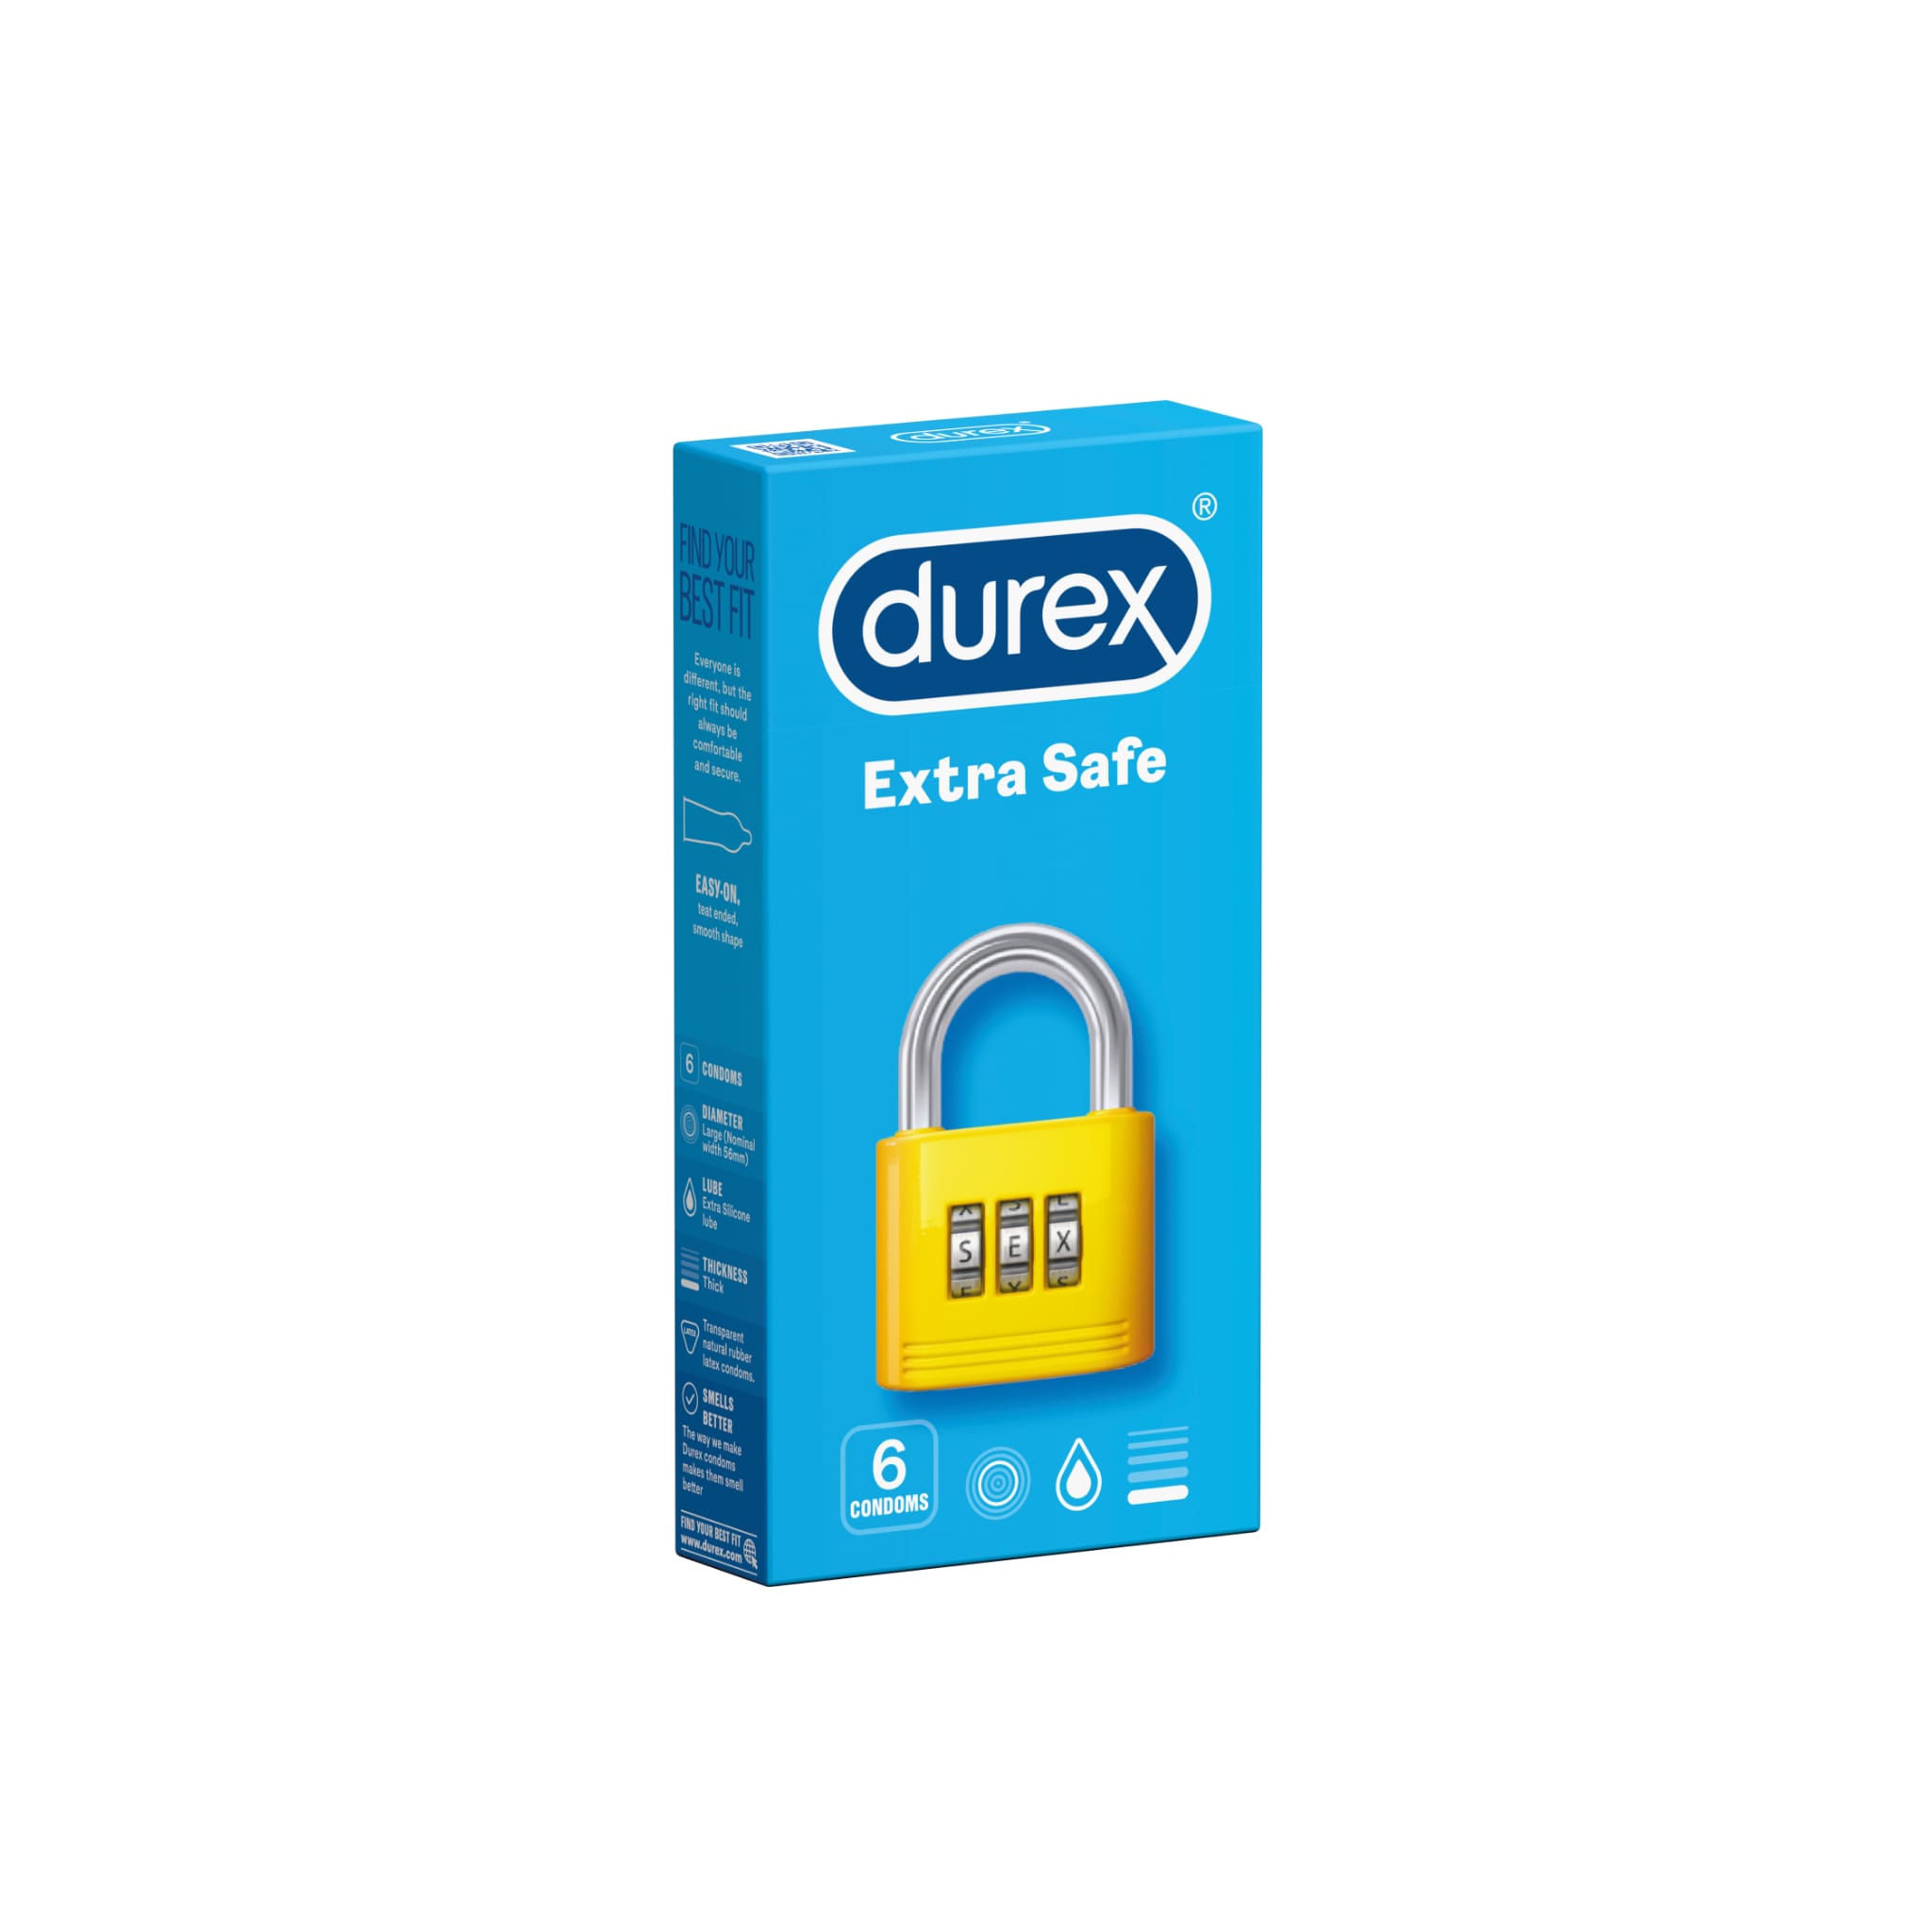 Anticonceptionale - Durex Extra Safe 6 buc, farmacieieftina.ro